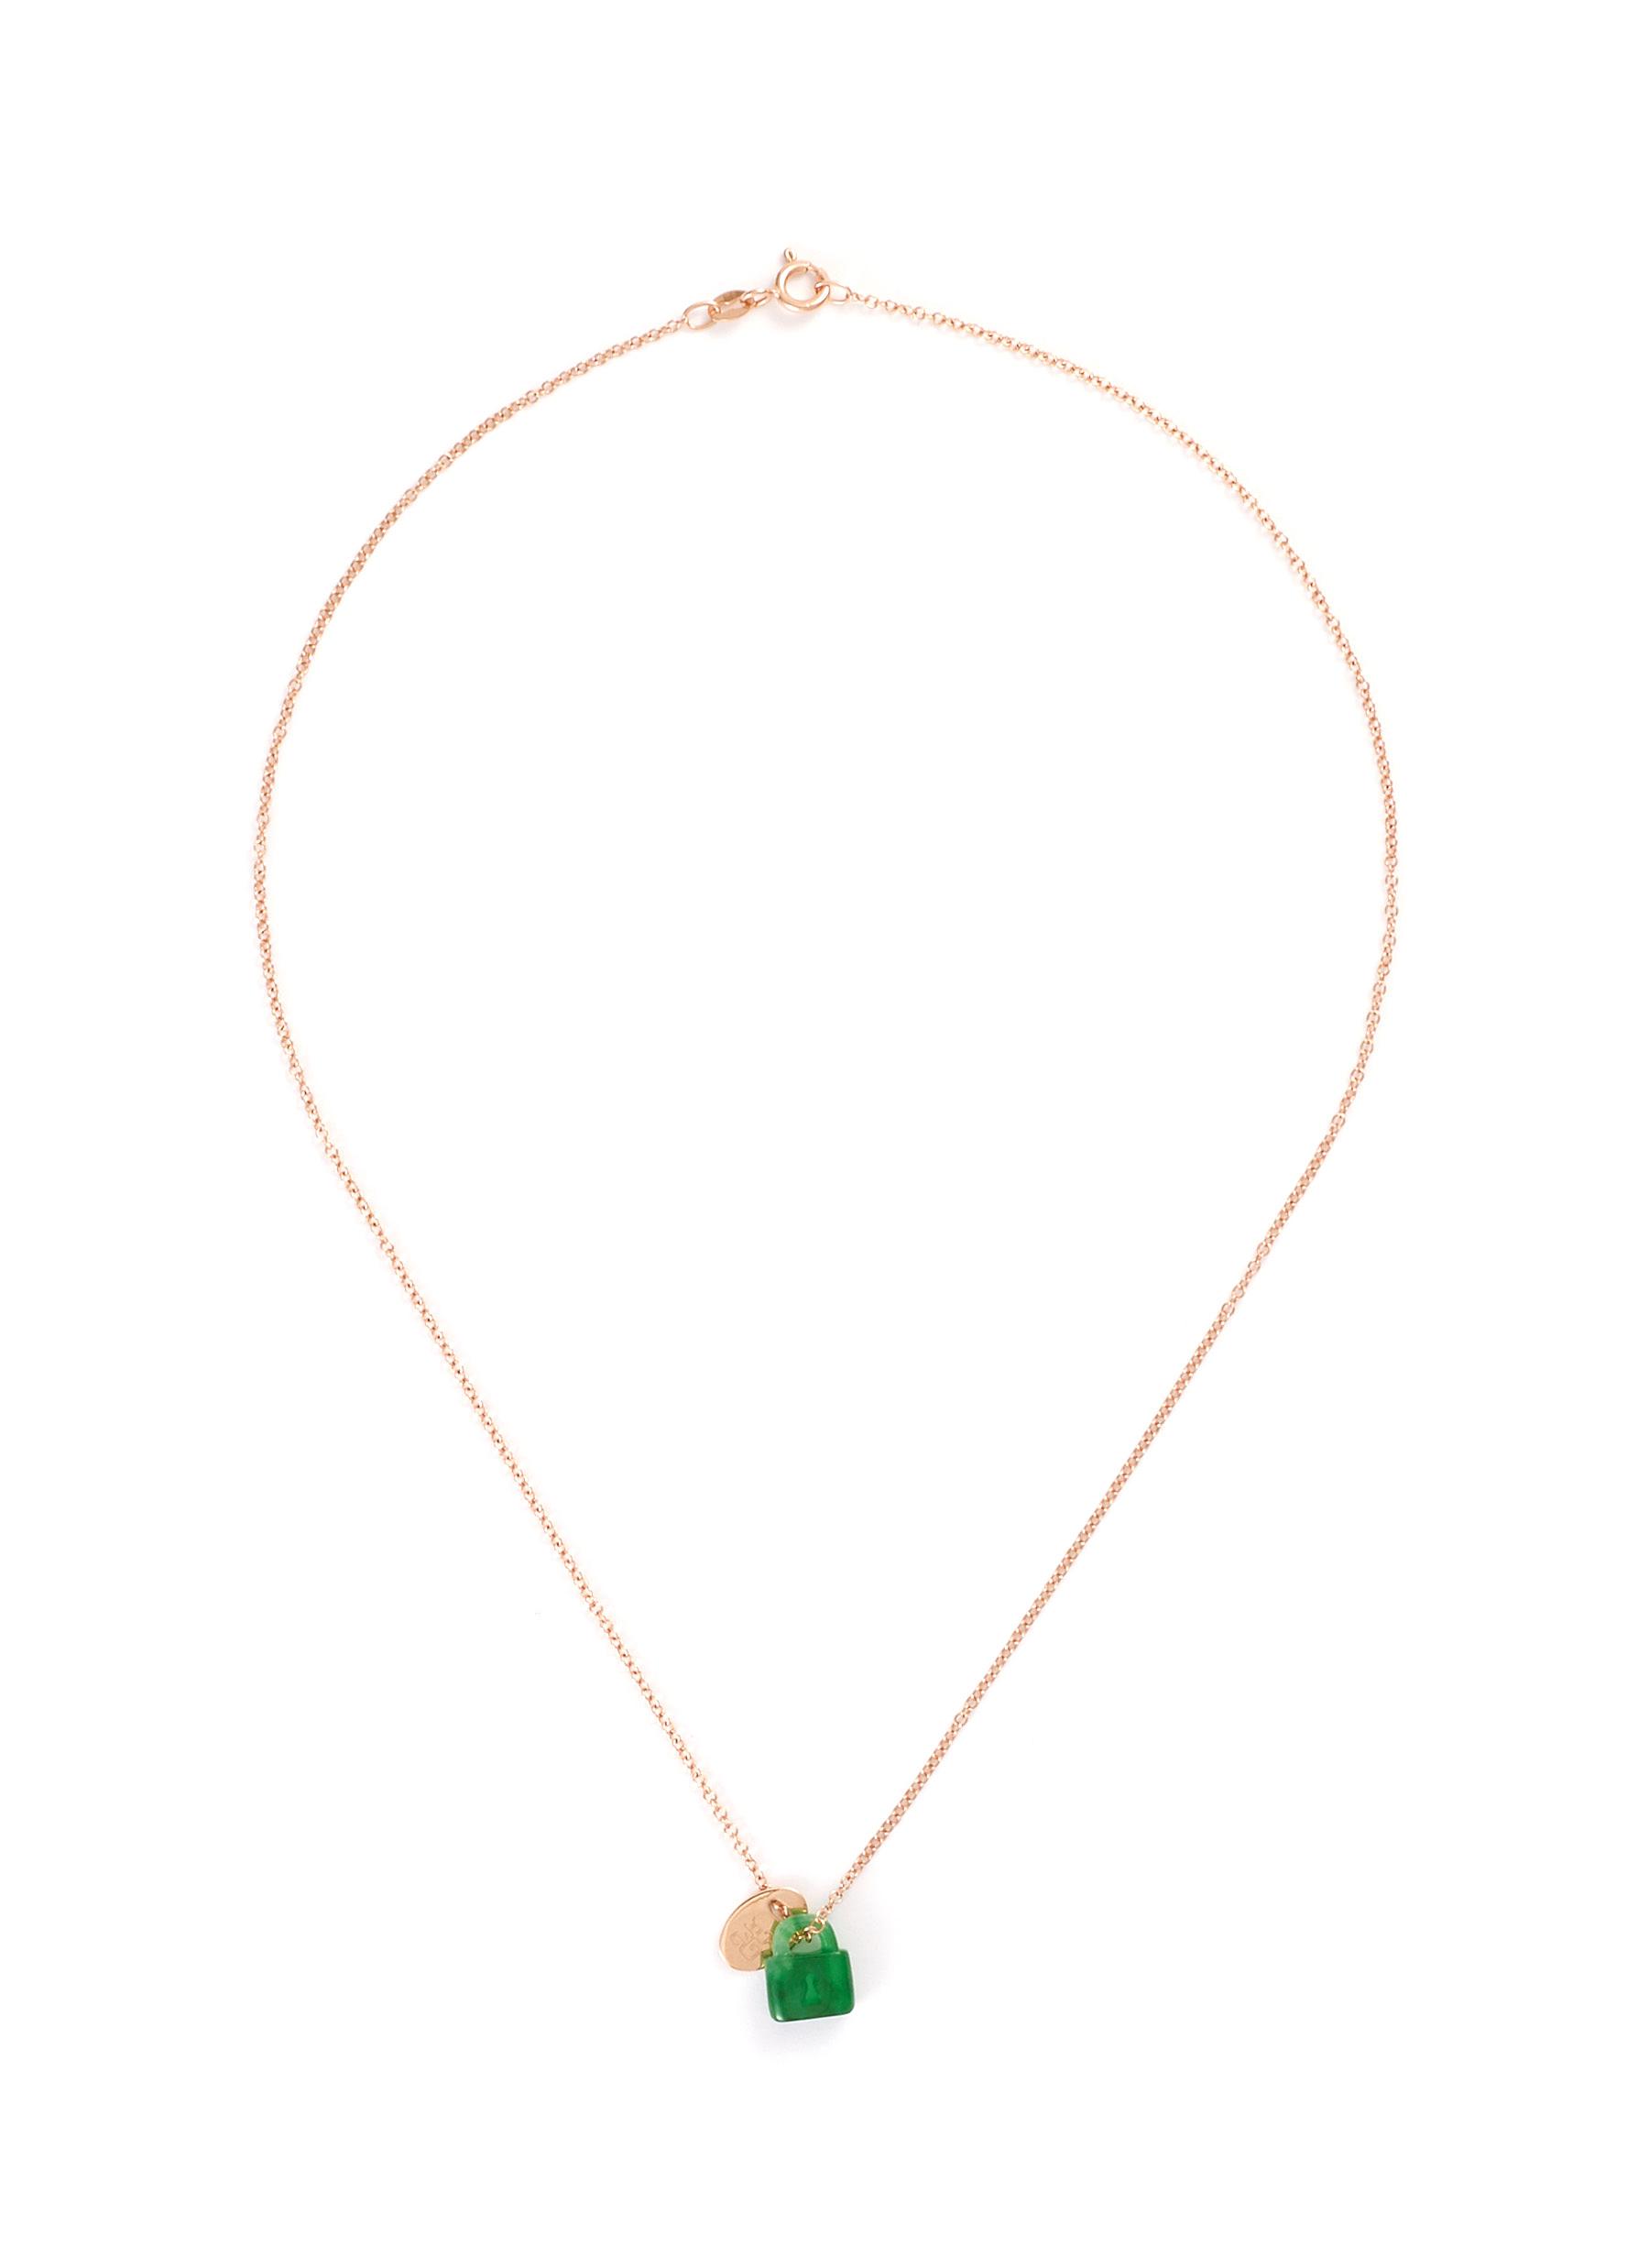 Jade lock pendant 18k rose gold necklace